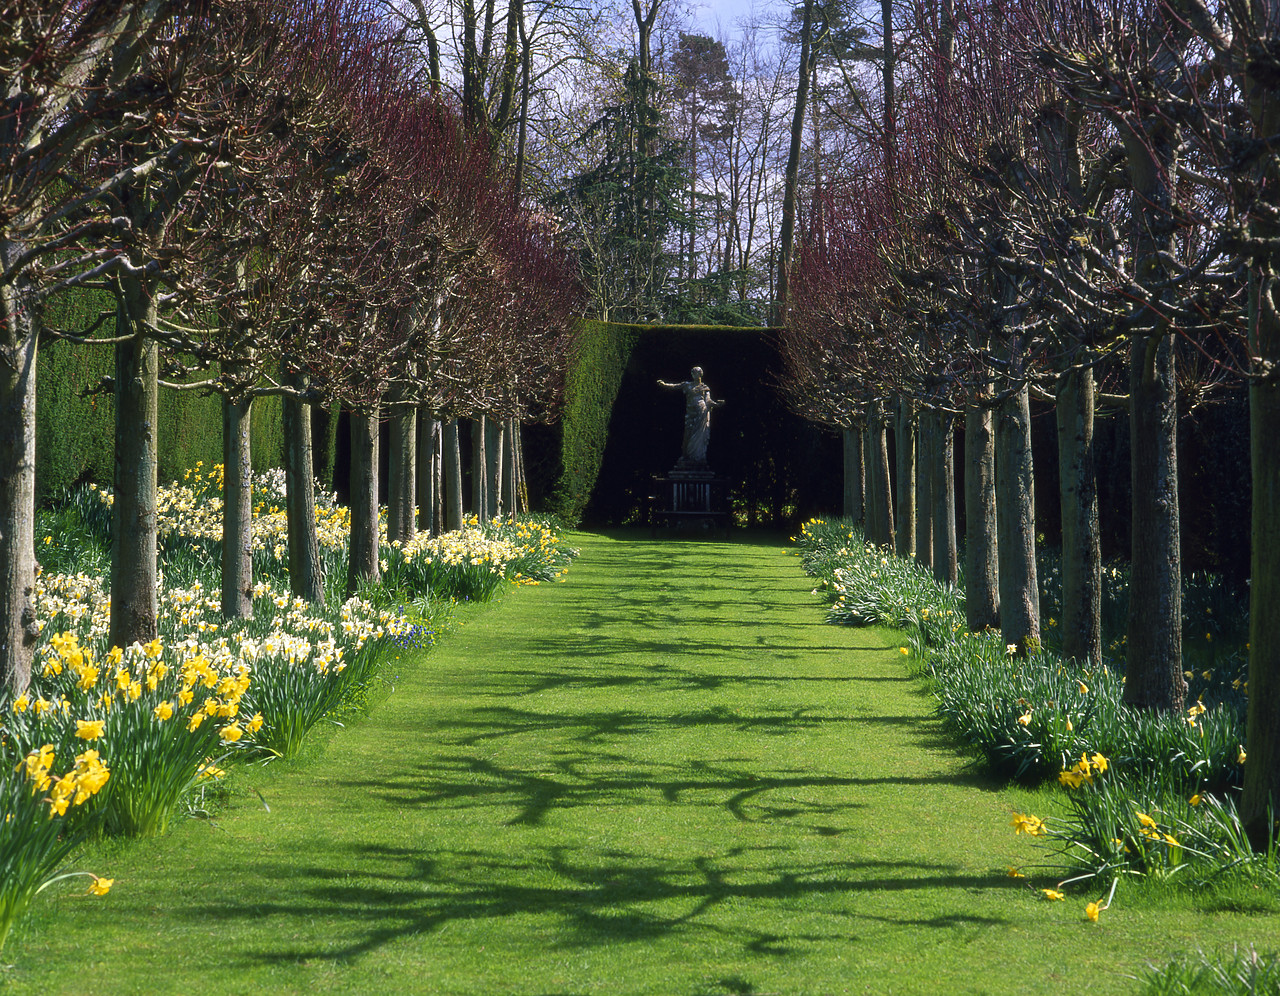 #200224-1 - Bradenham Hall Gardens in Spring, Bradenham, Norfolk, England